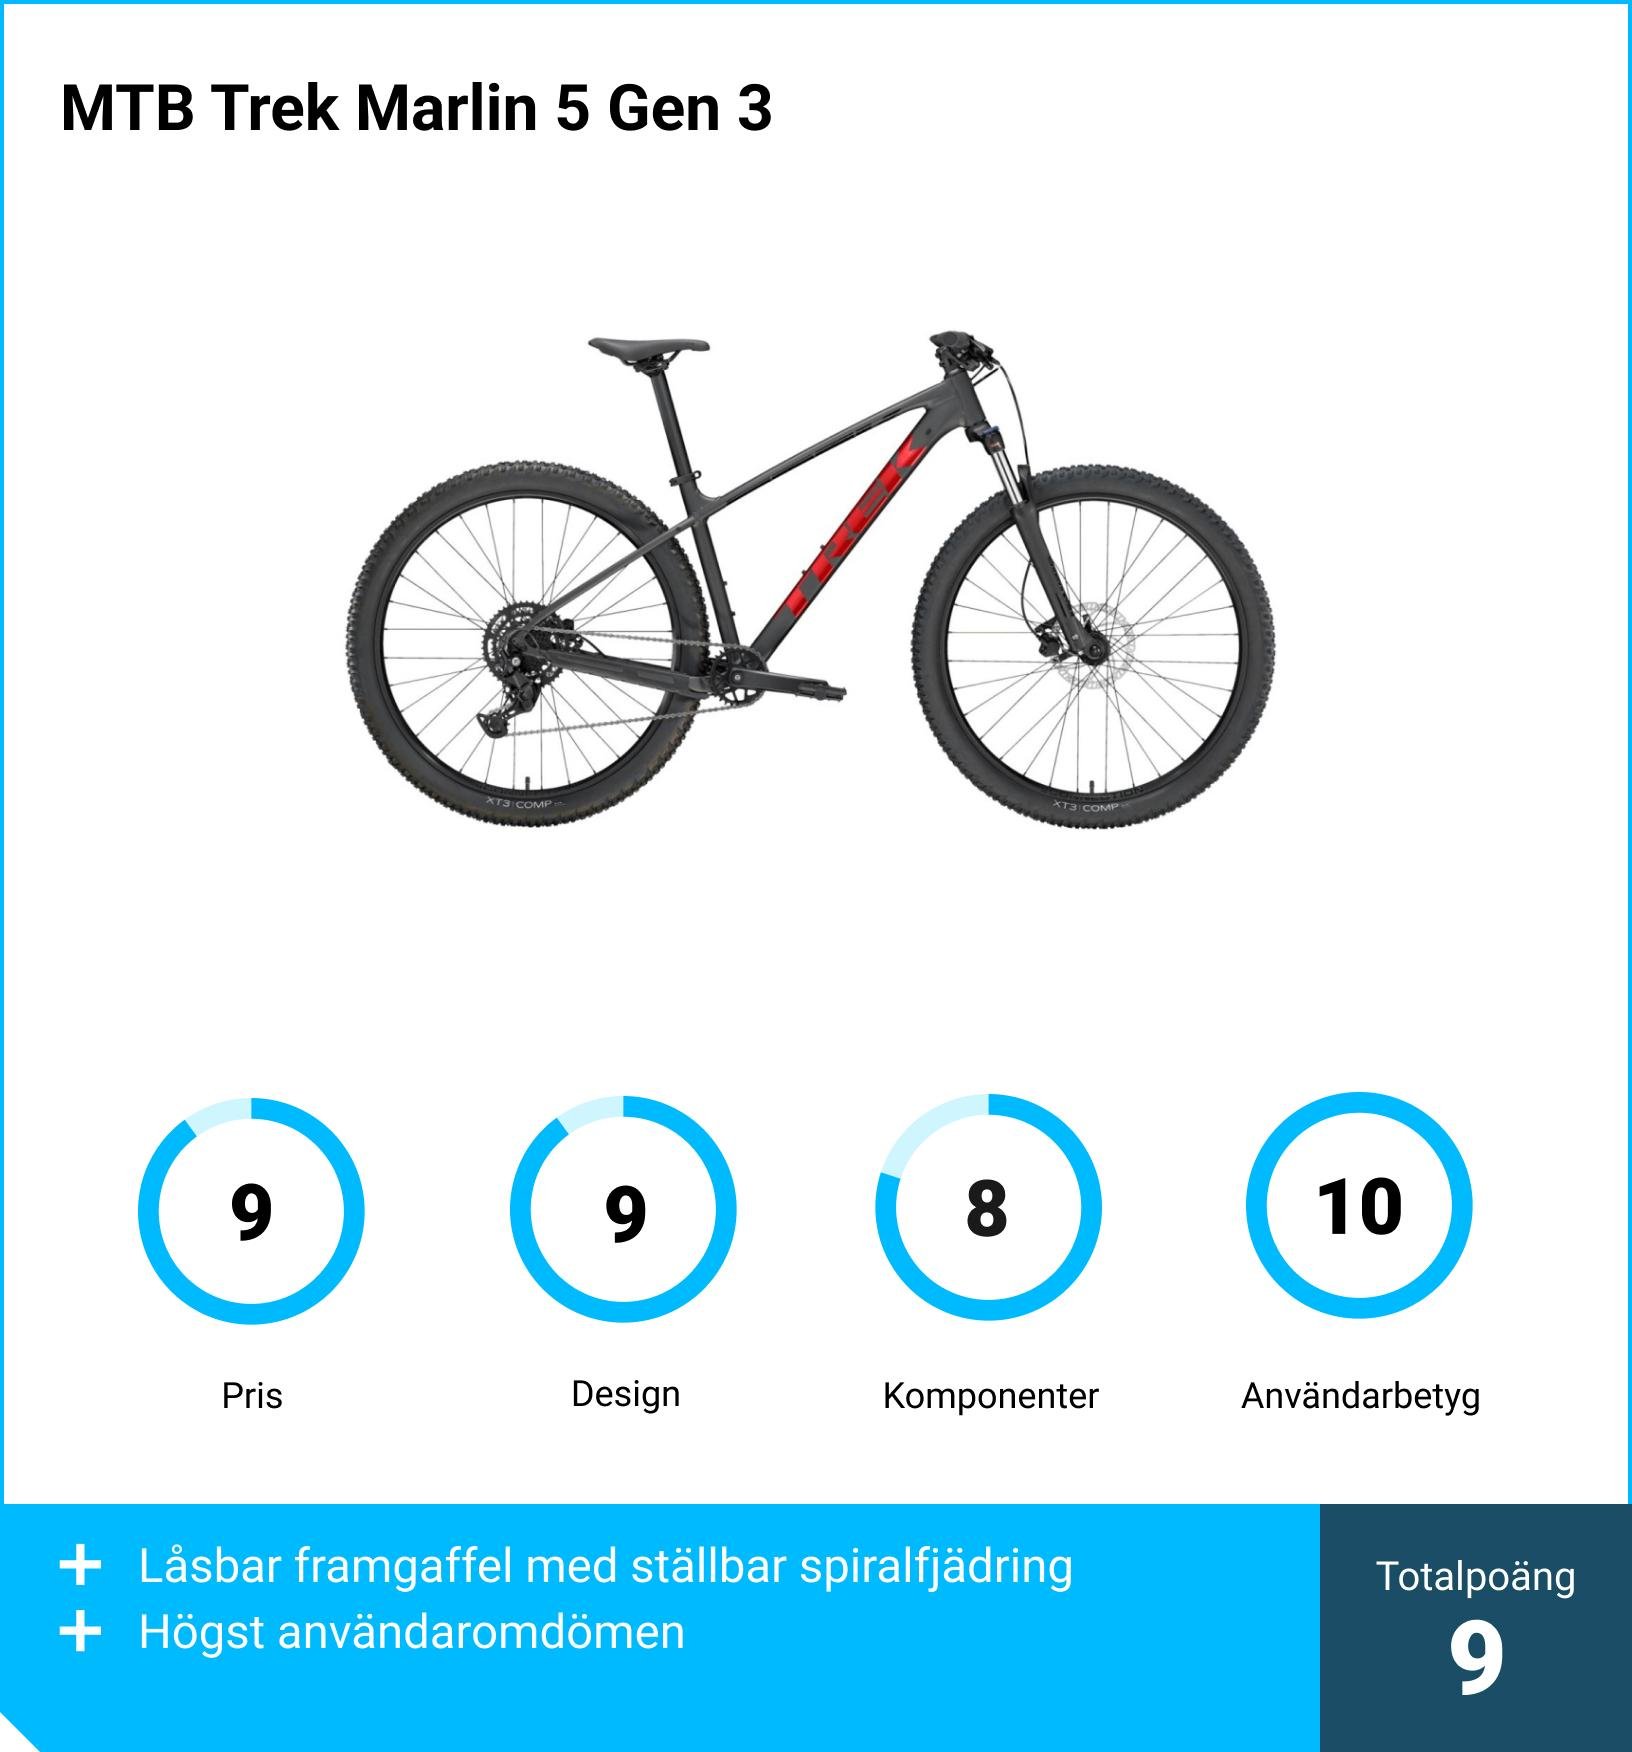 Mountainbike bäst i test - MTB Trek Marlin 5 Gen 3